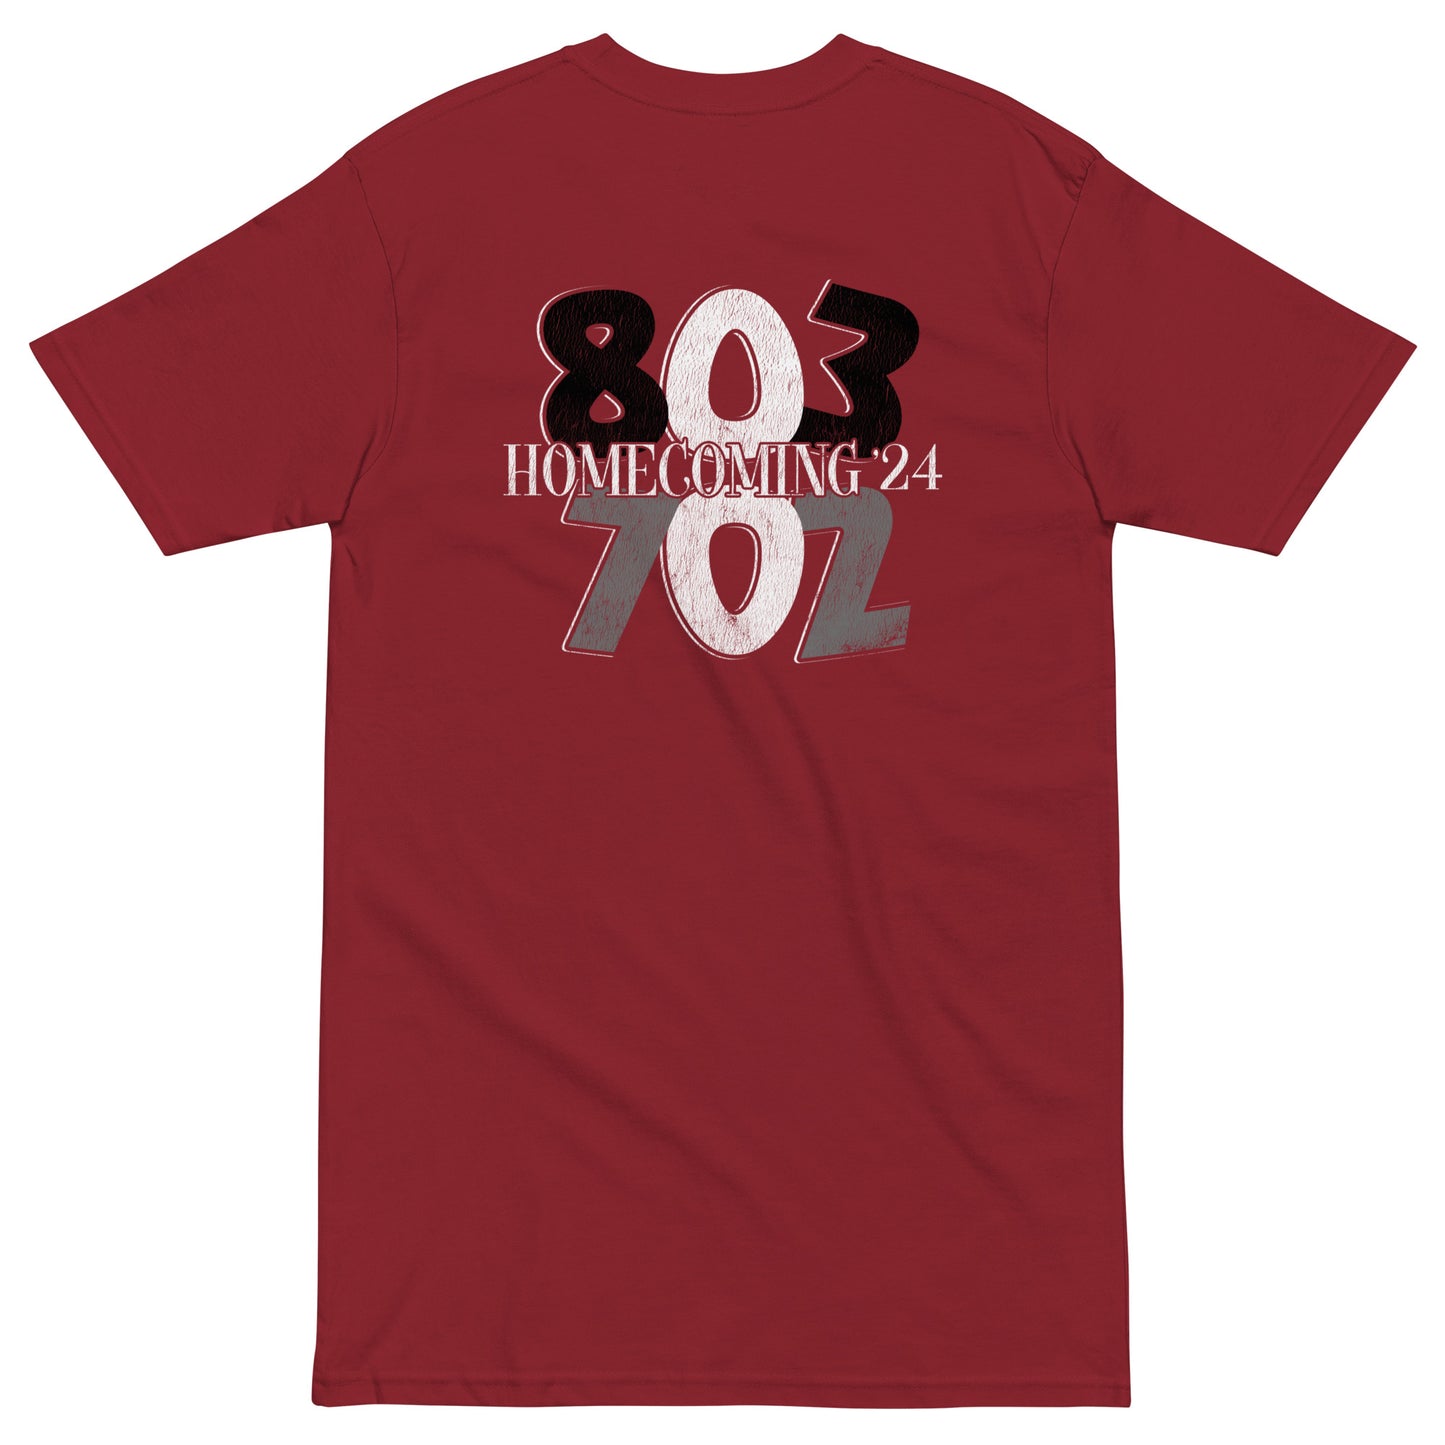 A'ja Homecoming 24 - Klever Shirtz